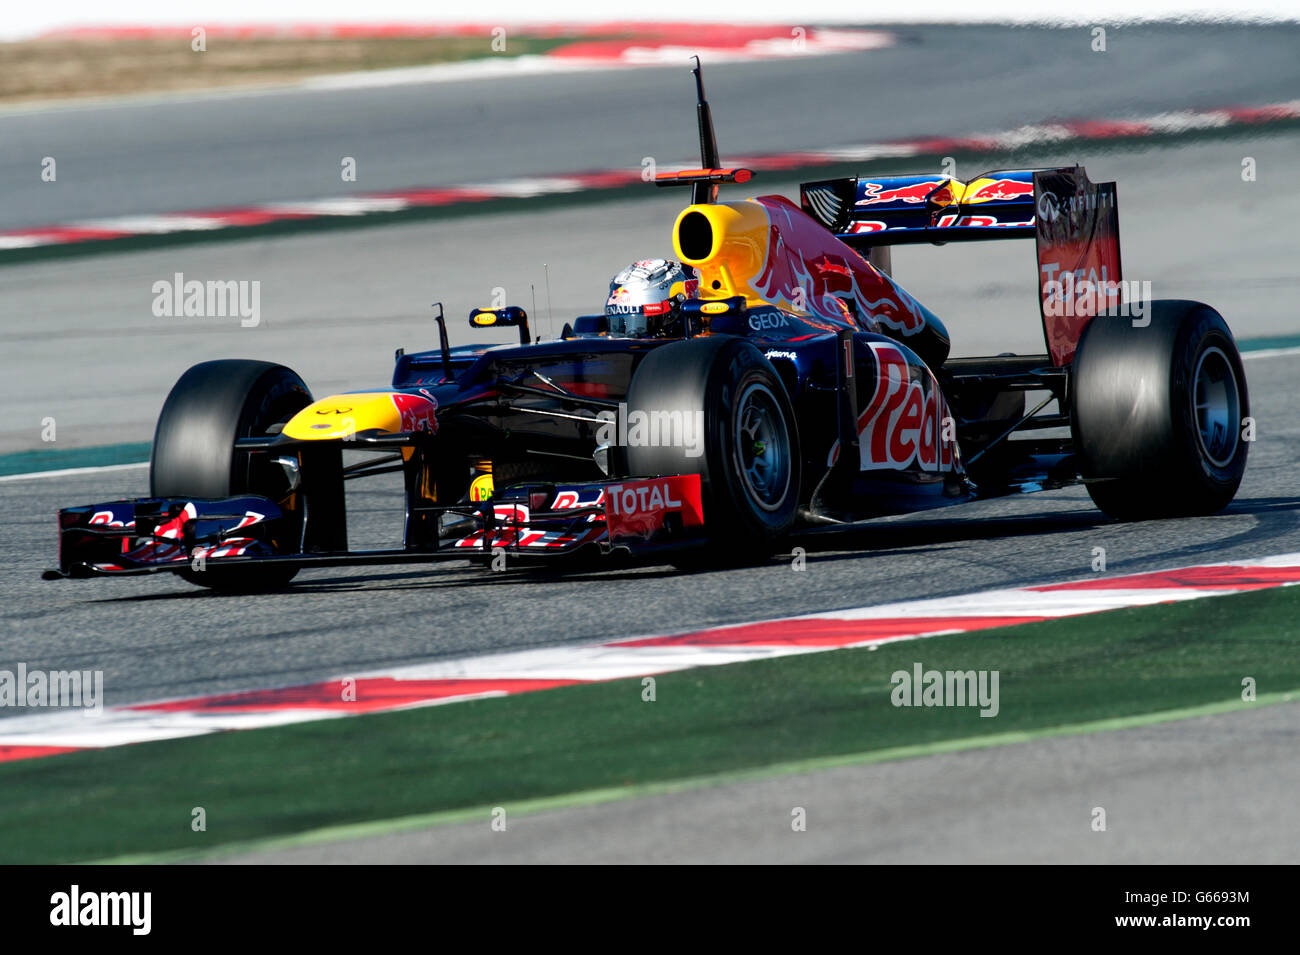 Sebastian Vettel, GER, Red Bull Racing-Renault RB8, Formule 1 séances d'essai, février 2012, Barcelone, Espagne, Europe Banque D'Images